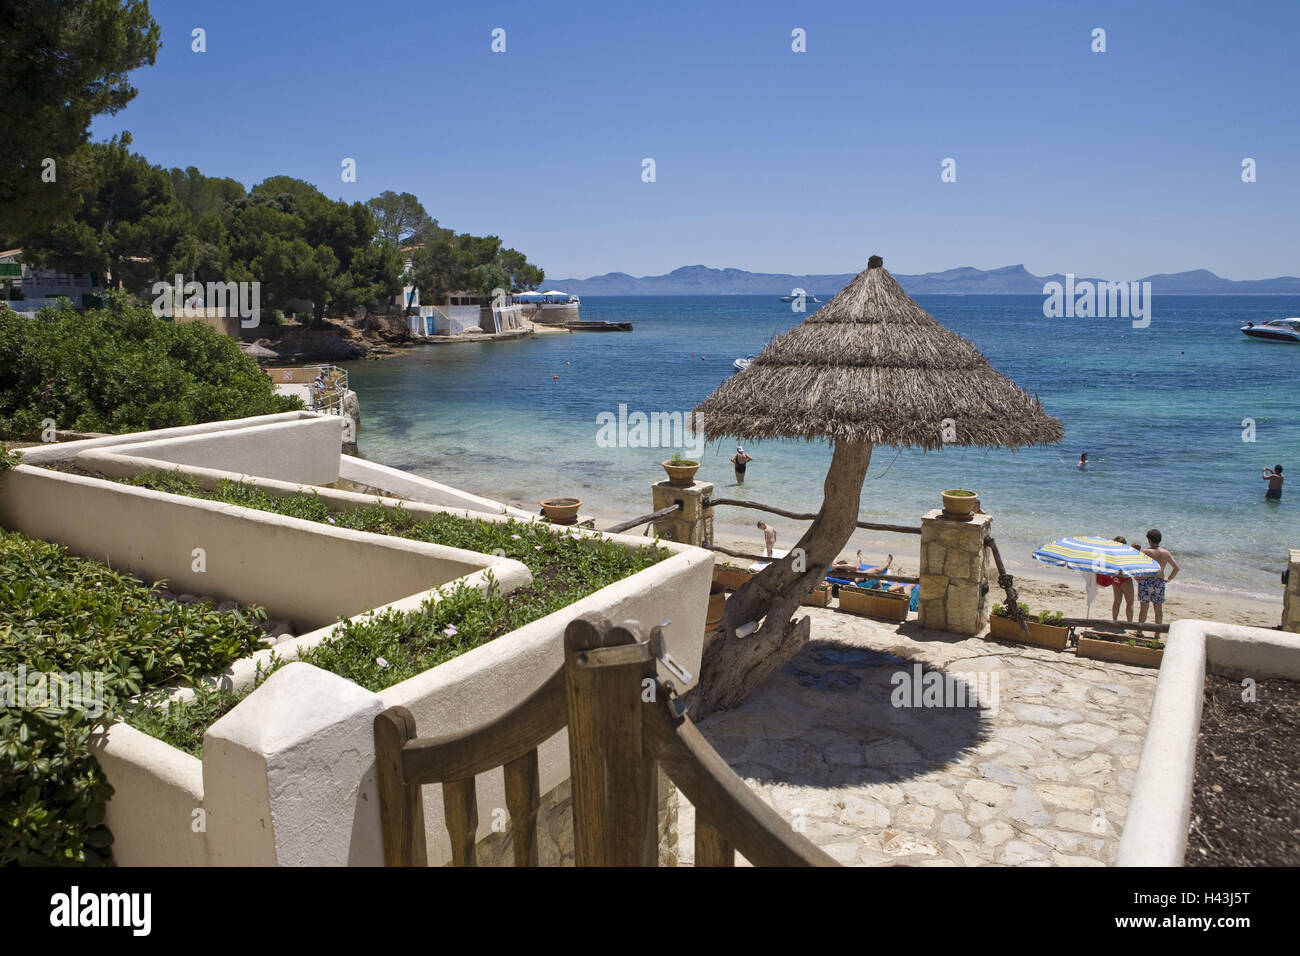 Spain, the Balearic Islands, island Majorca, Alcanda, beach, terrace, sunshade, tourist, no model release, Stock Photo